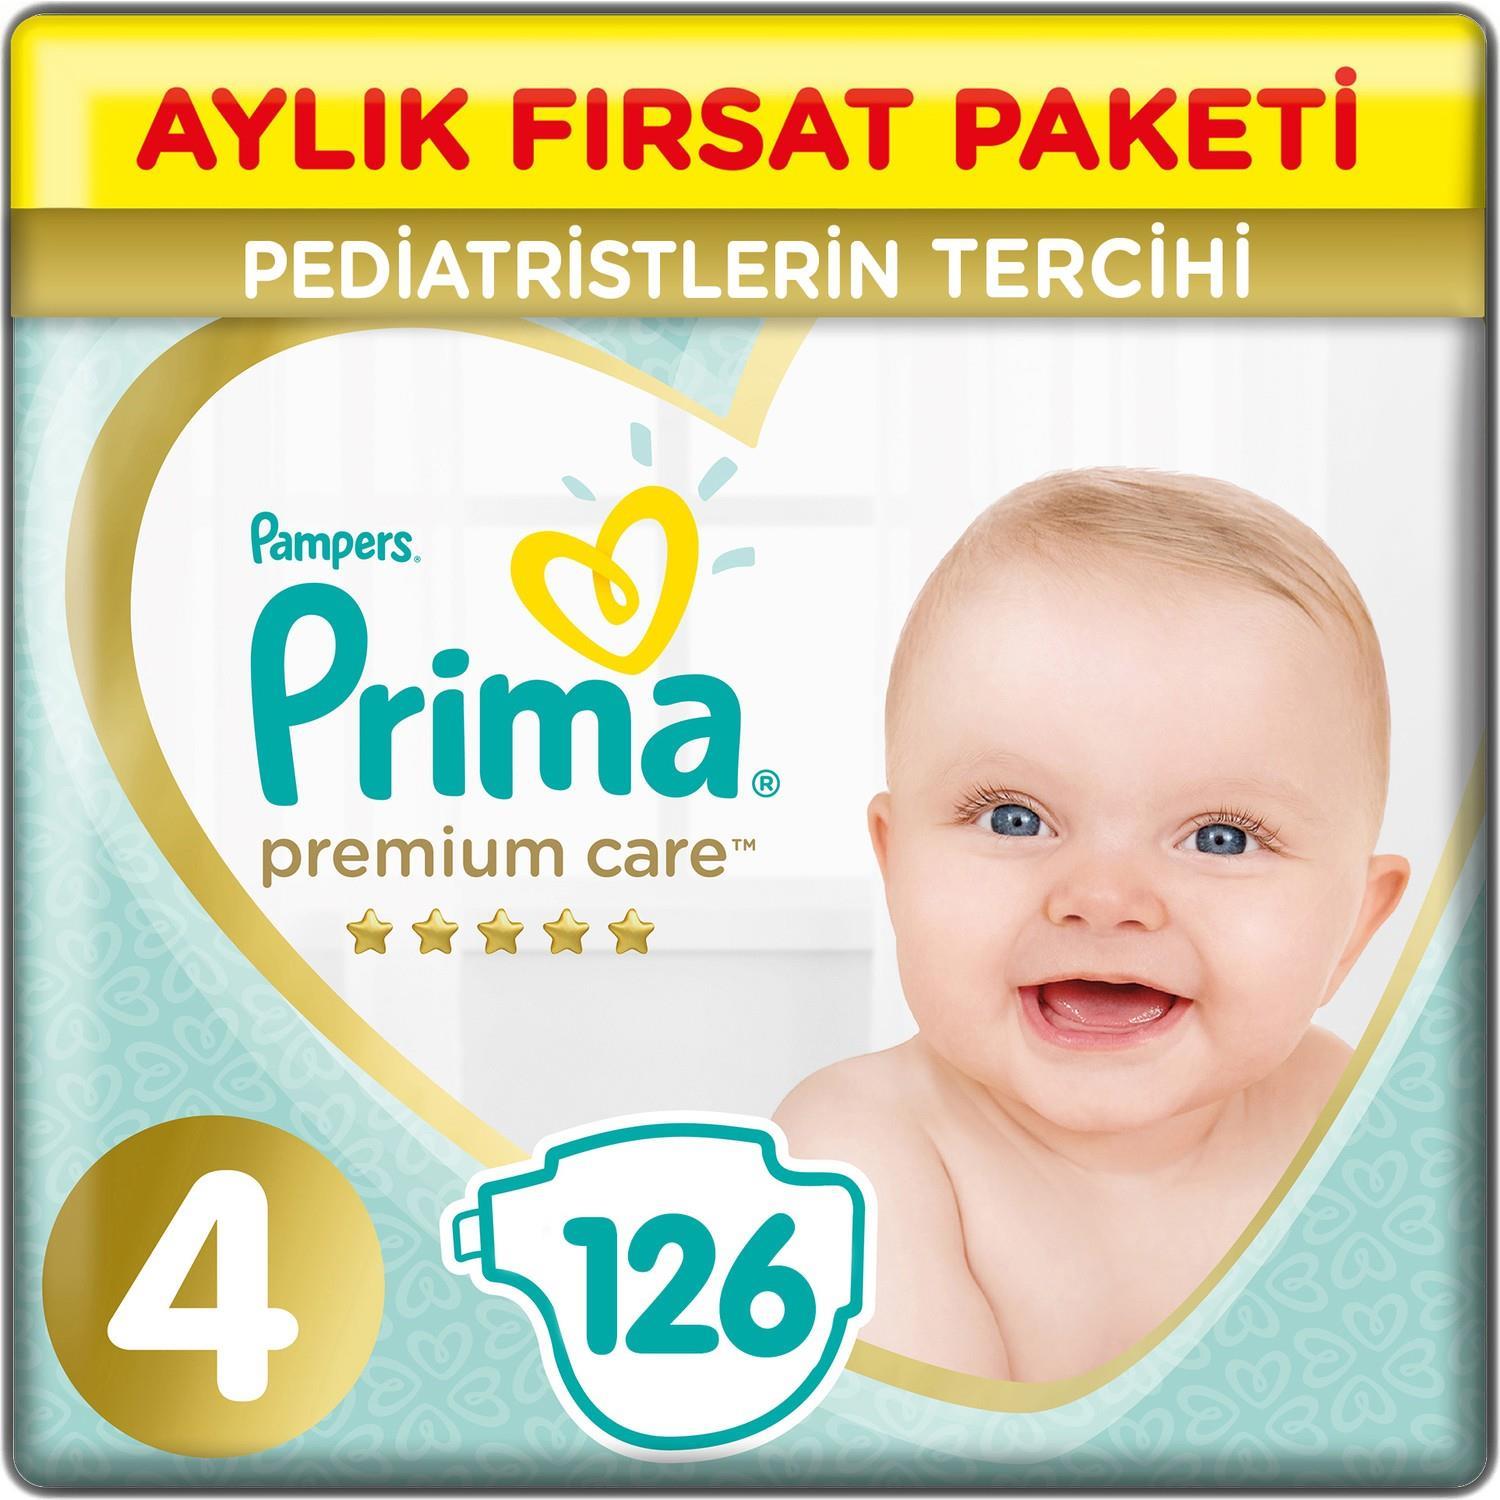 Prima Bebek Bezi Premium Care 4 Beden 126 Adet Maxi Aylık Fırsat Paketi